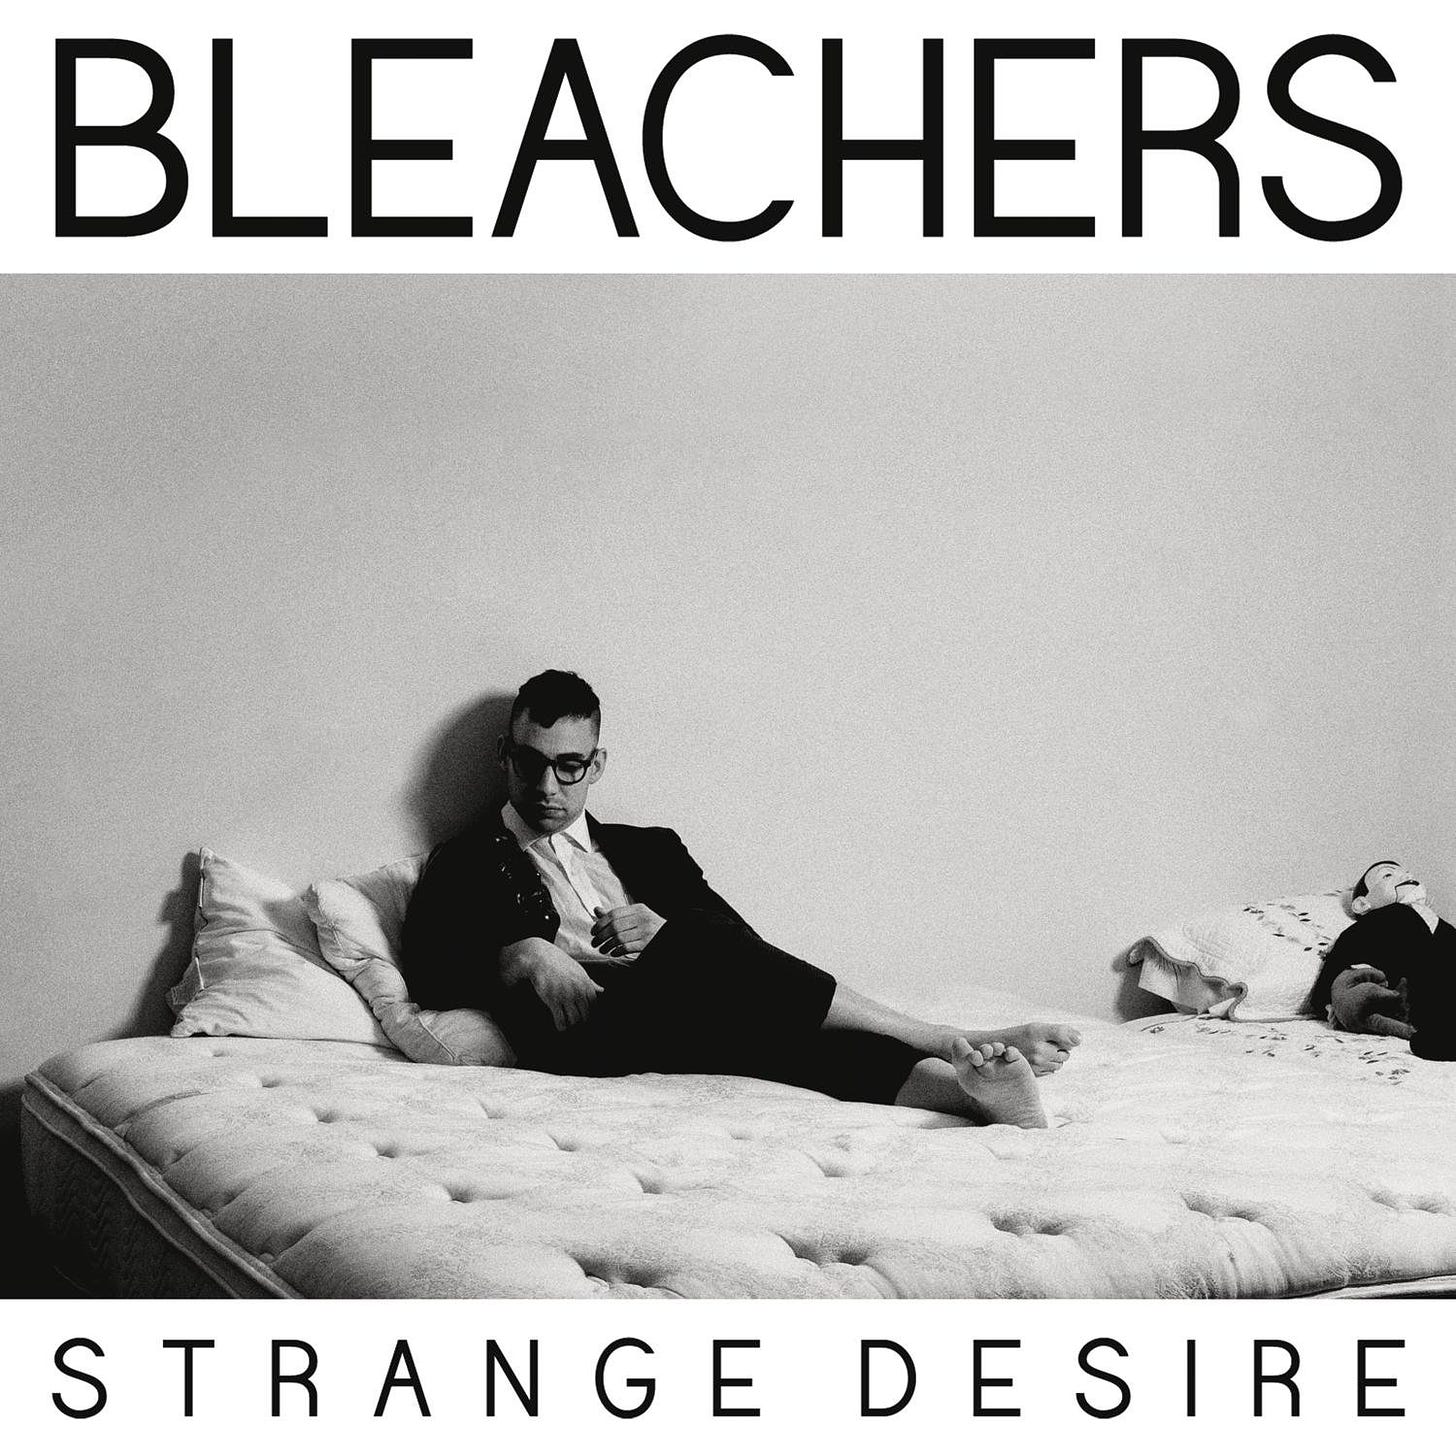 Bleachers - Strange Desire - Amazon.com Music